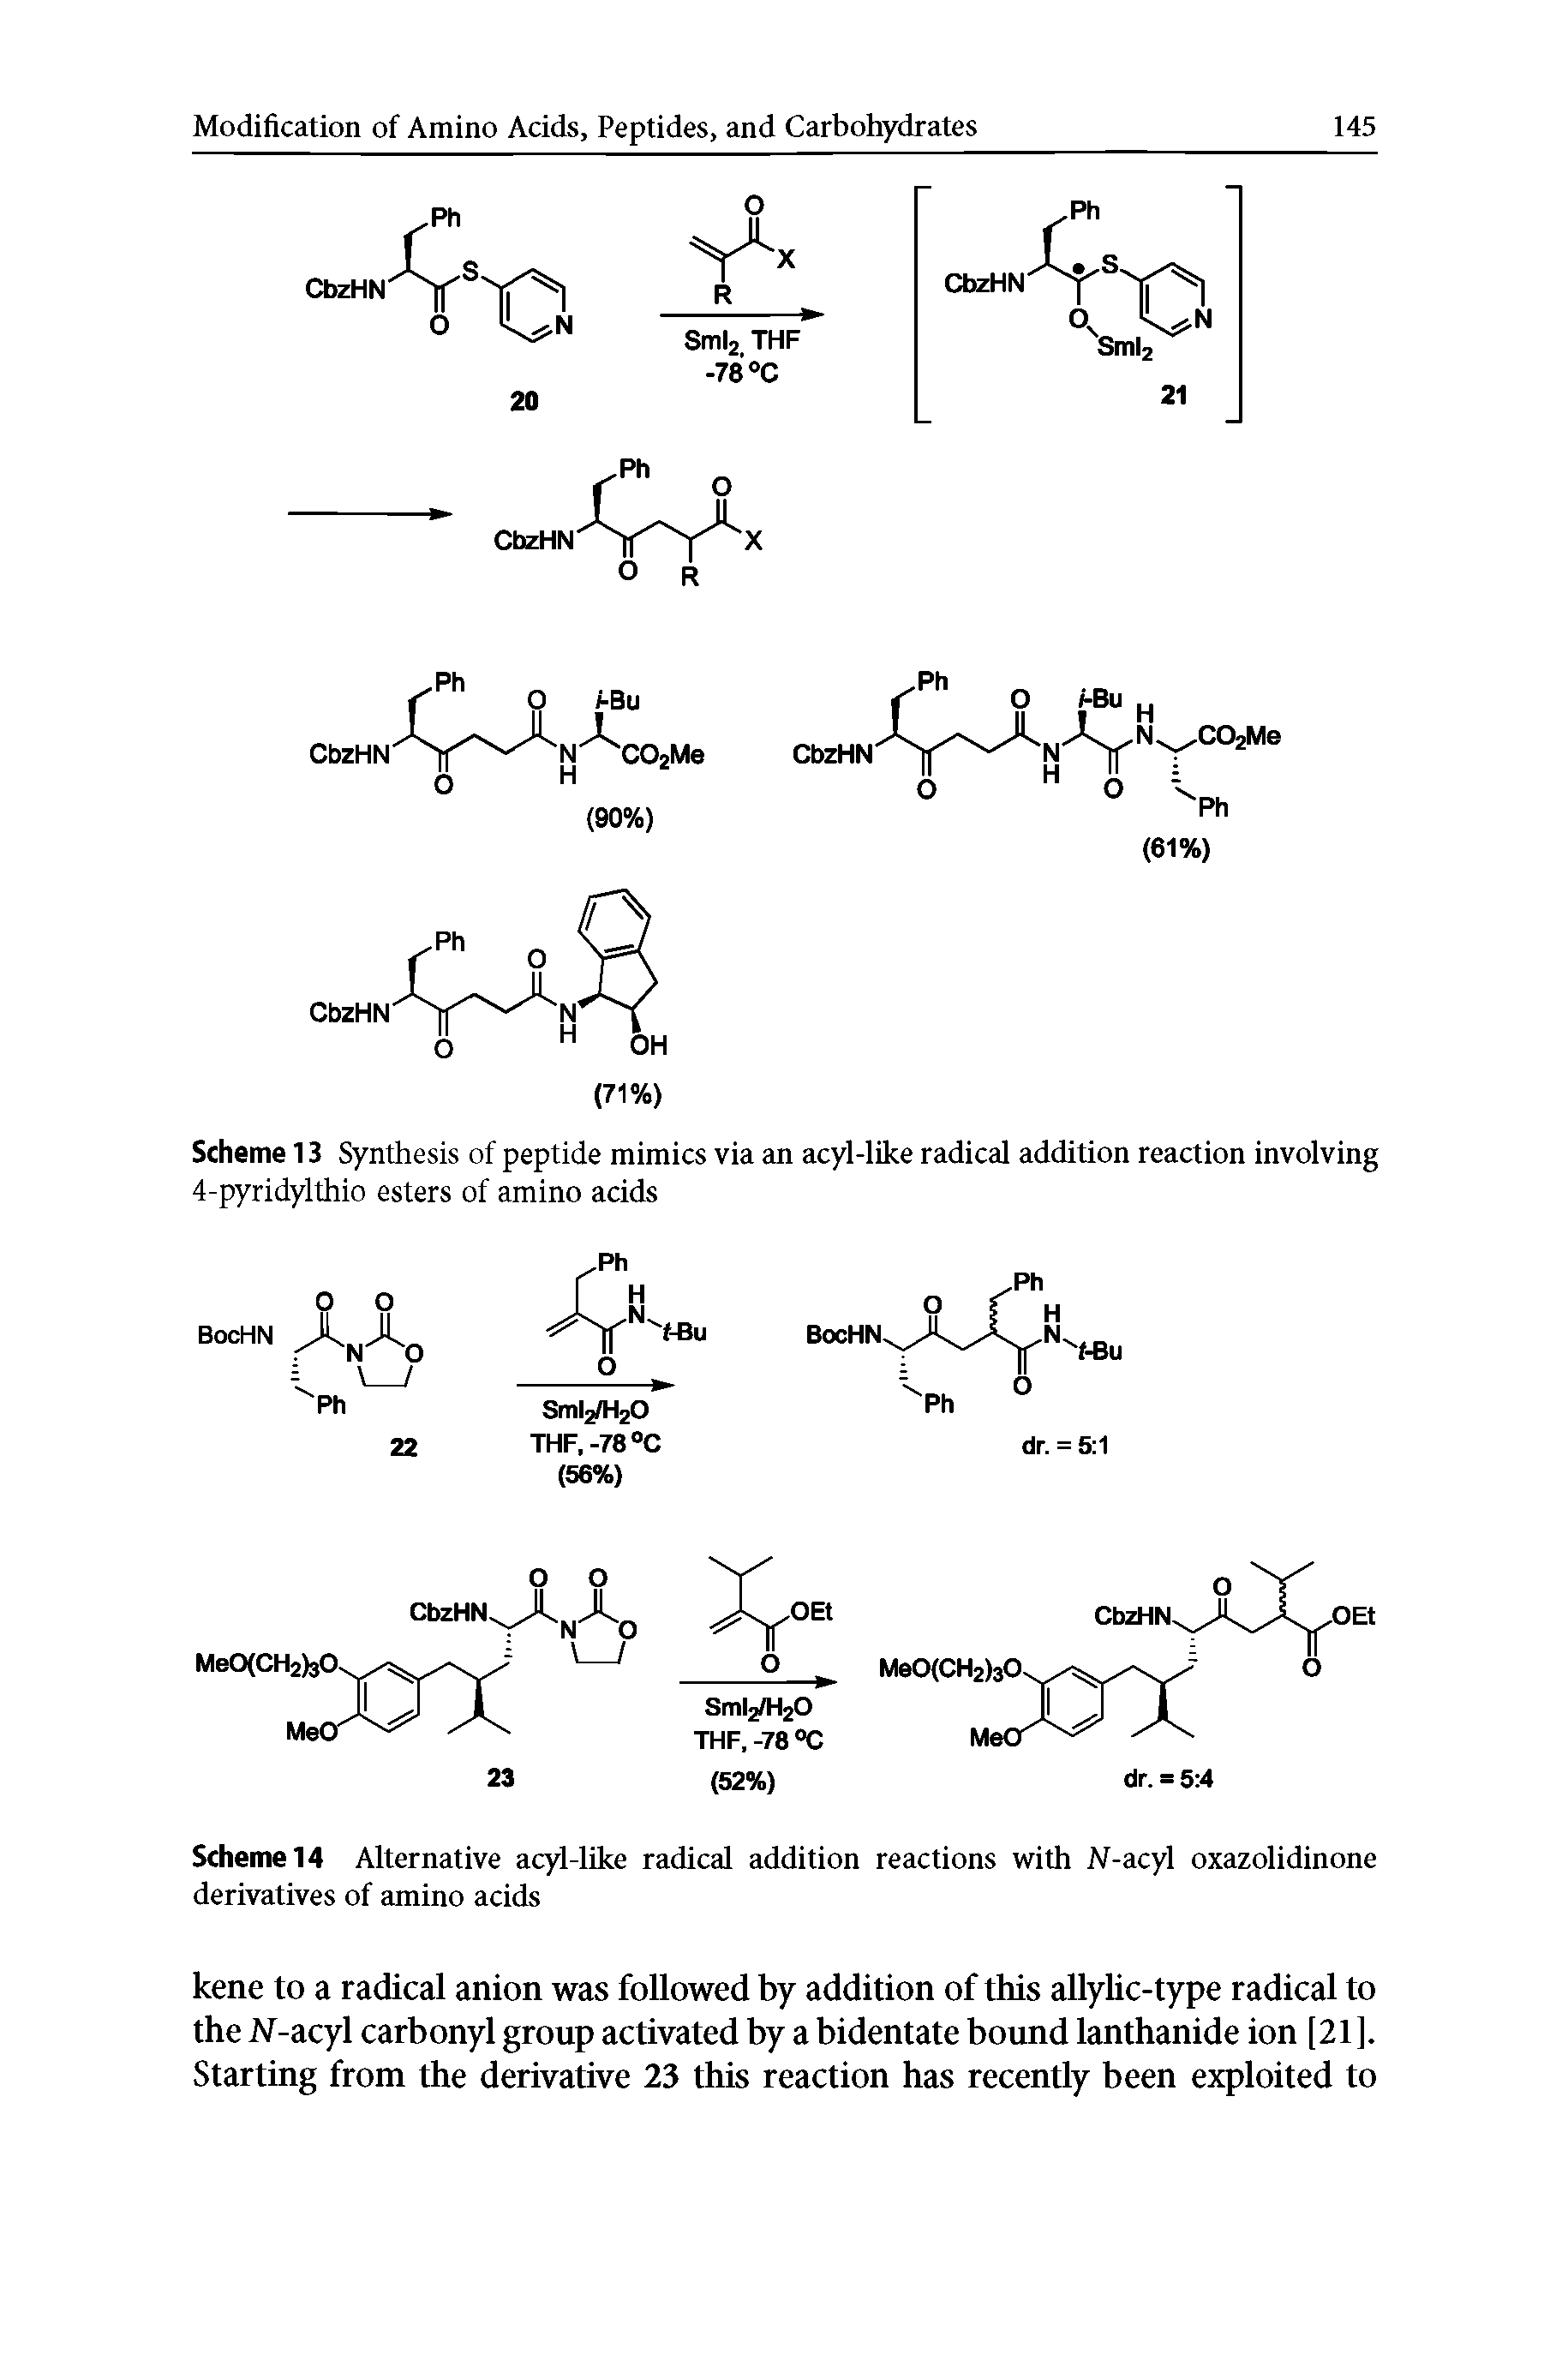 Scheme 14 Alternative acyl-like radical addition reactions with N-acyl oxazolidinone derivatives of amino acids...